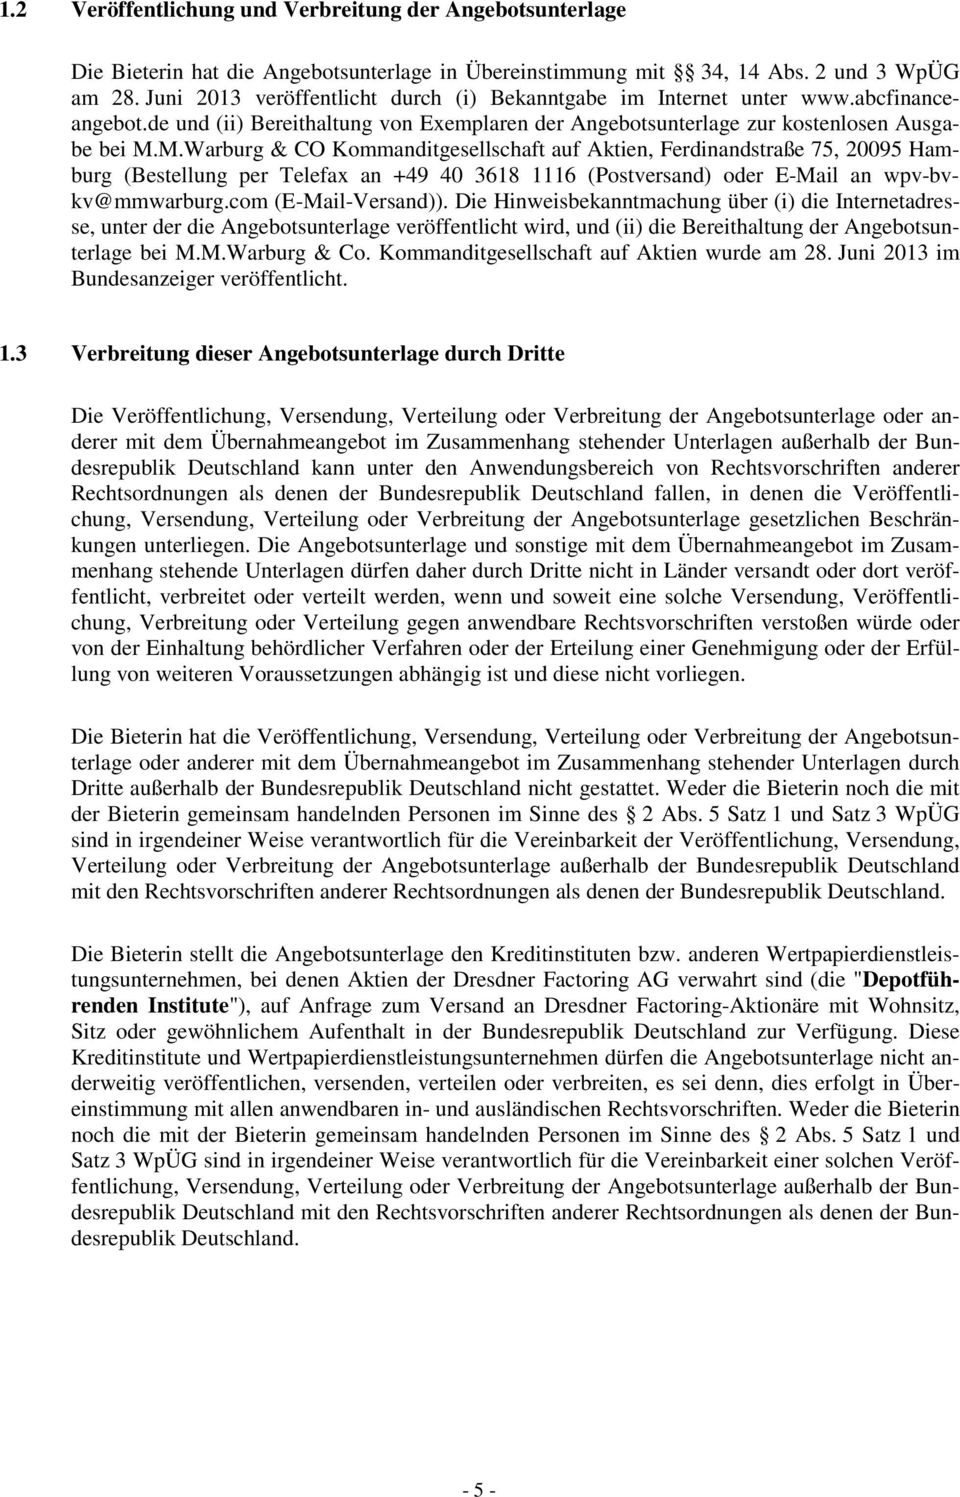 M.Warburg & CO Kommanditgesellschaft auf Aktien, Ferdinandstraße 75, 20095 Hamburg (Bestellung per Telefax an +49 40 3618 1116 (Postversand) oder E-Mail an wpv-bvkv@mmwarburg.com (E-Mail-Versand)).